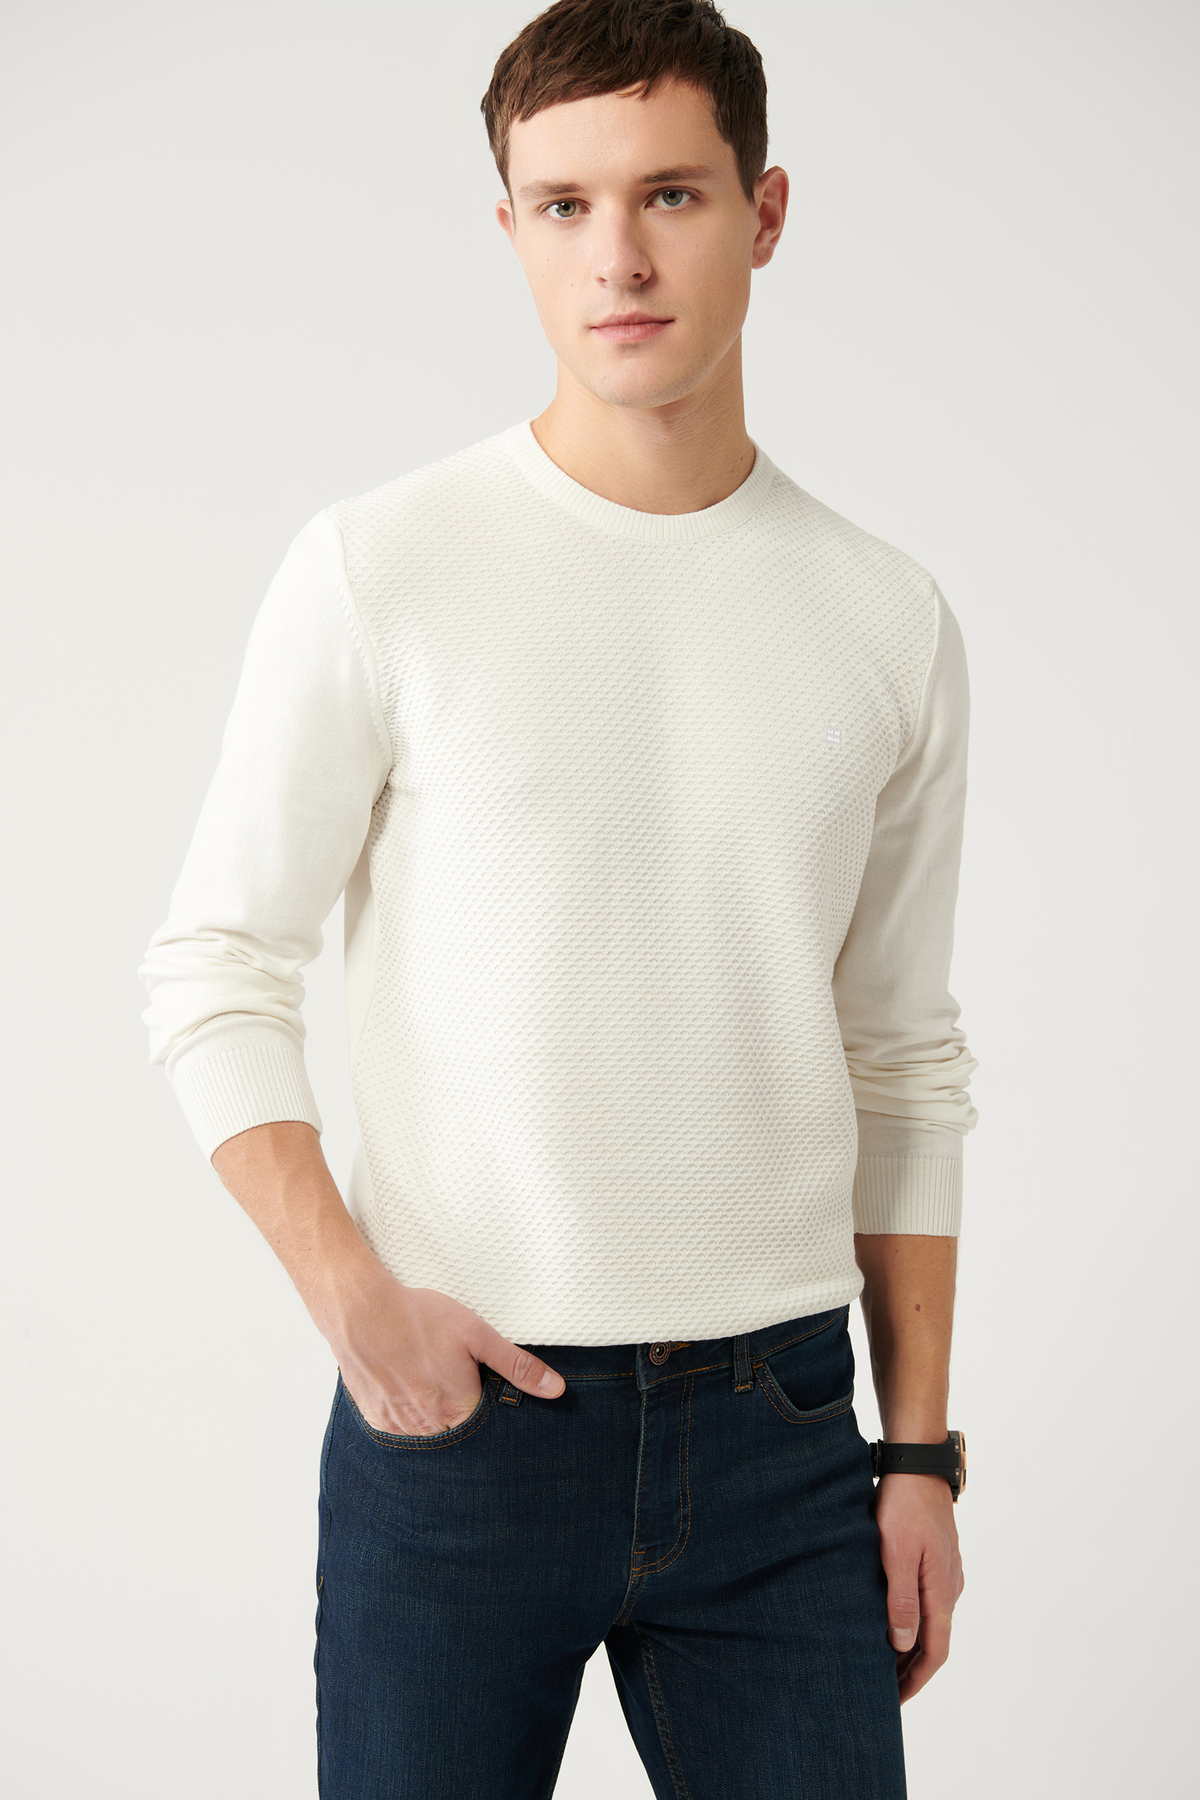 Avva Men's White Knitwear Sweater Crew Neck Front Textured Cotton Regular Fit